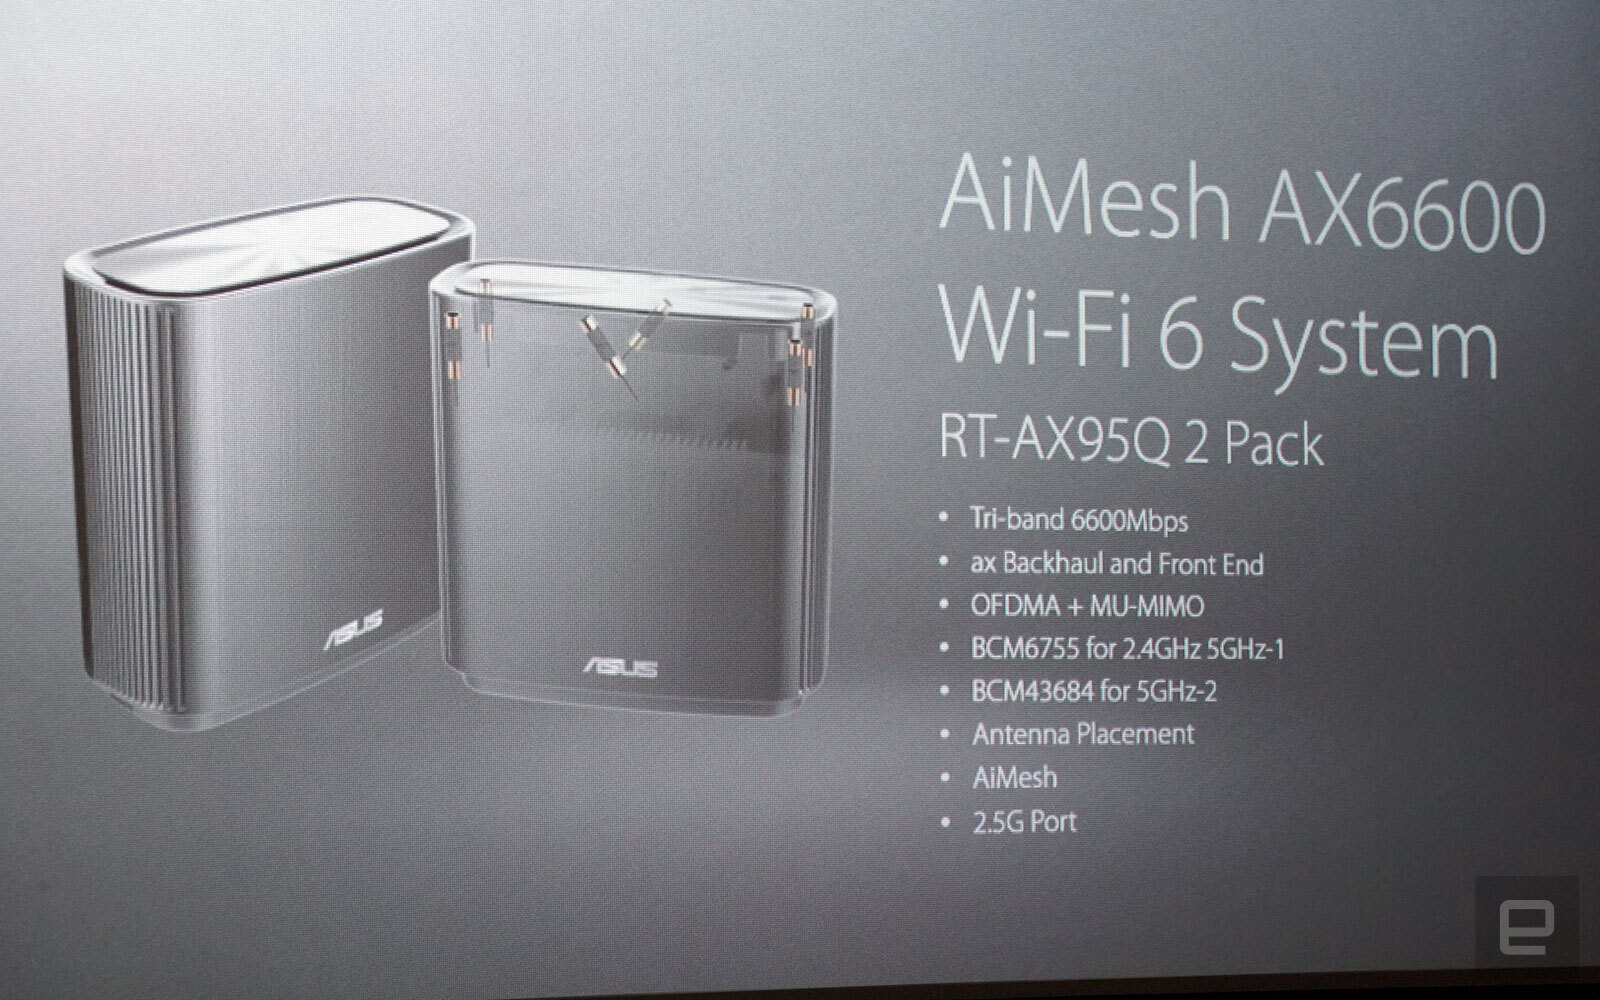 ASUS AiMesh AX6600 WiFi 6 system